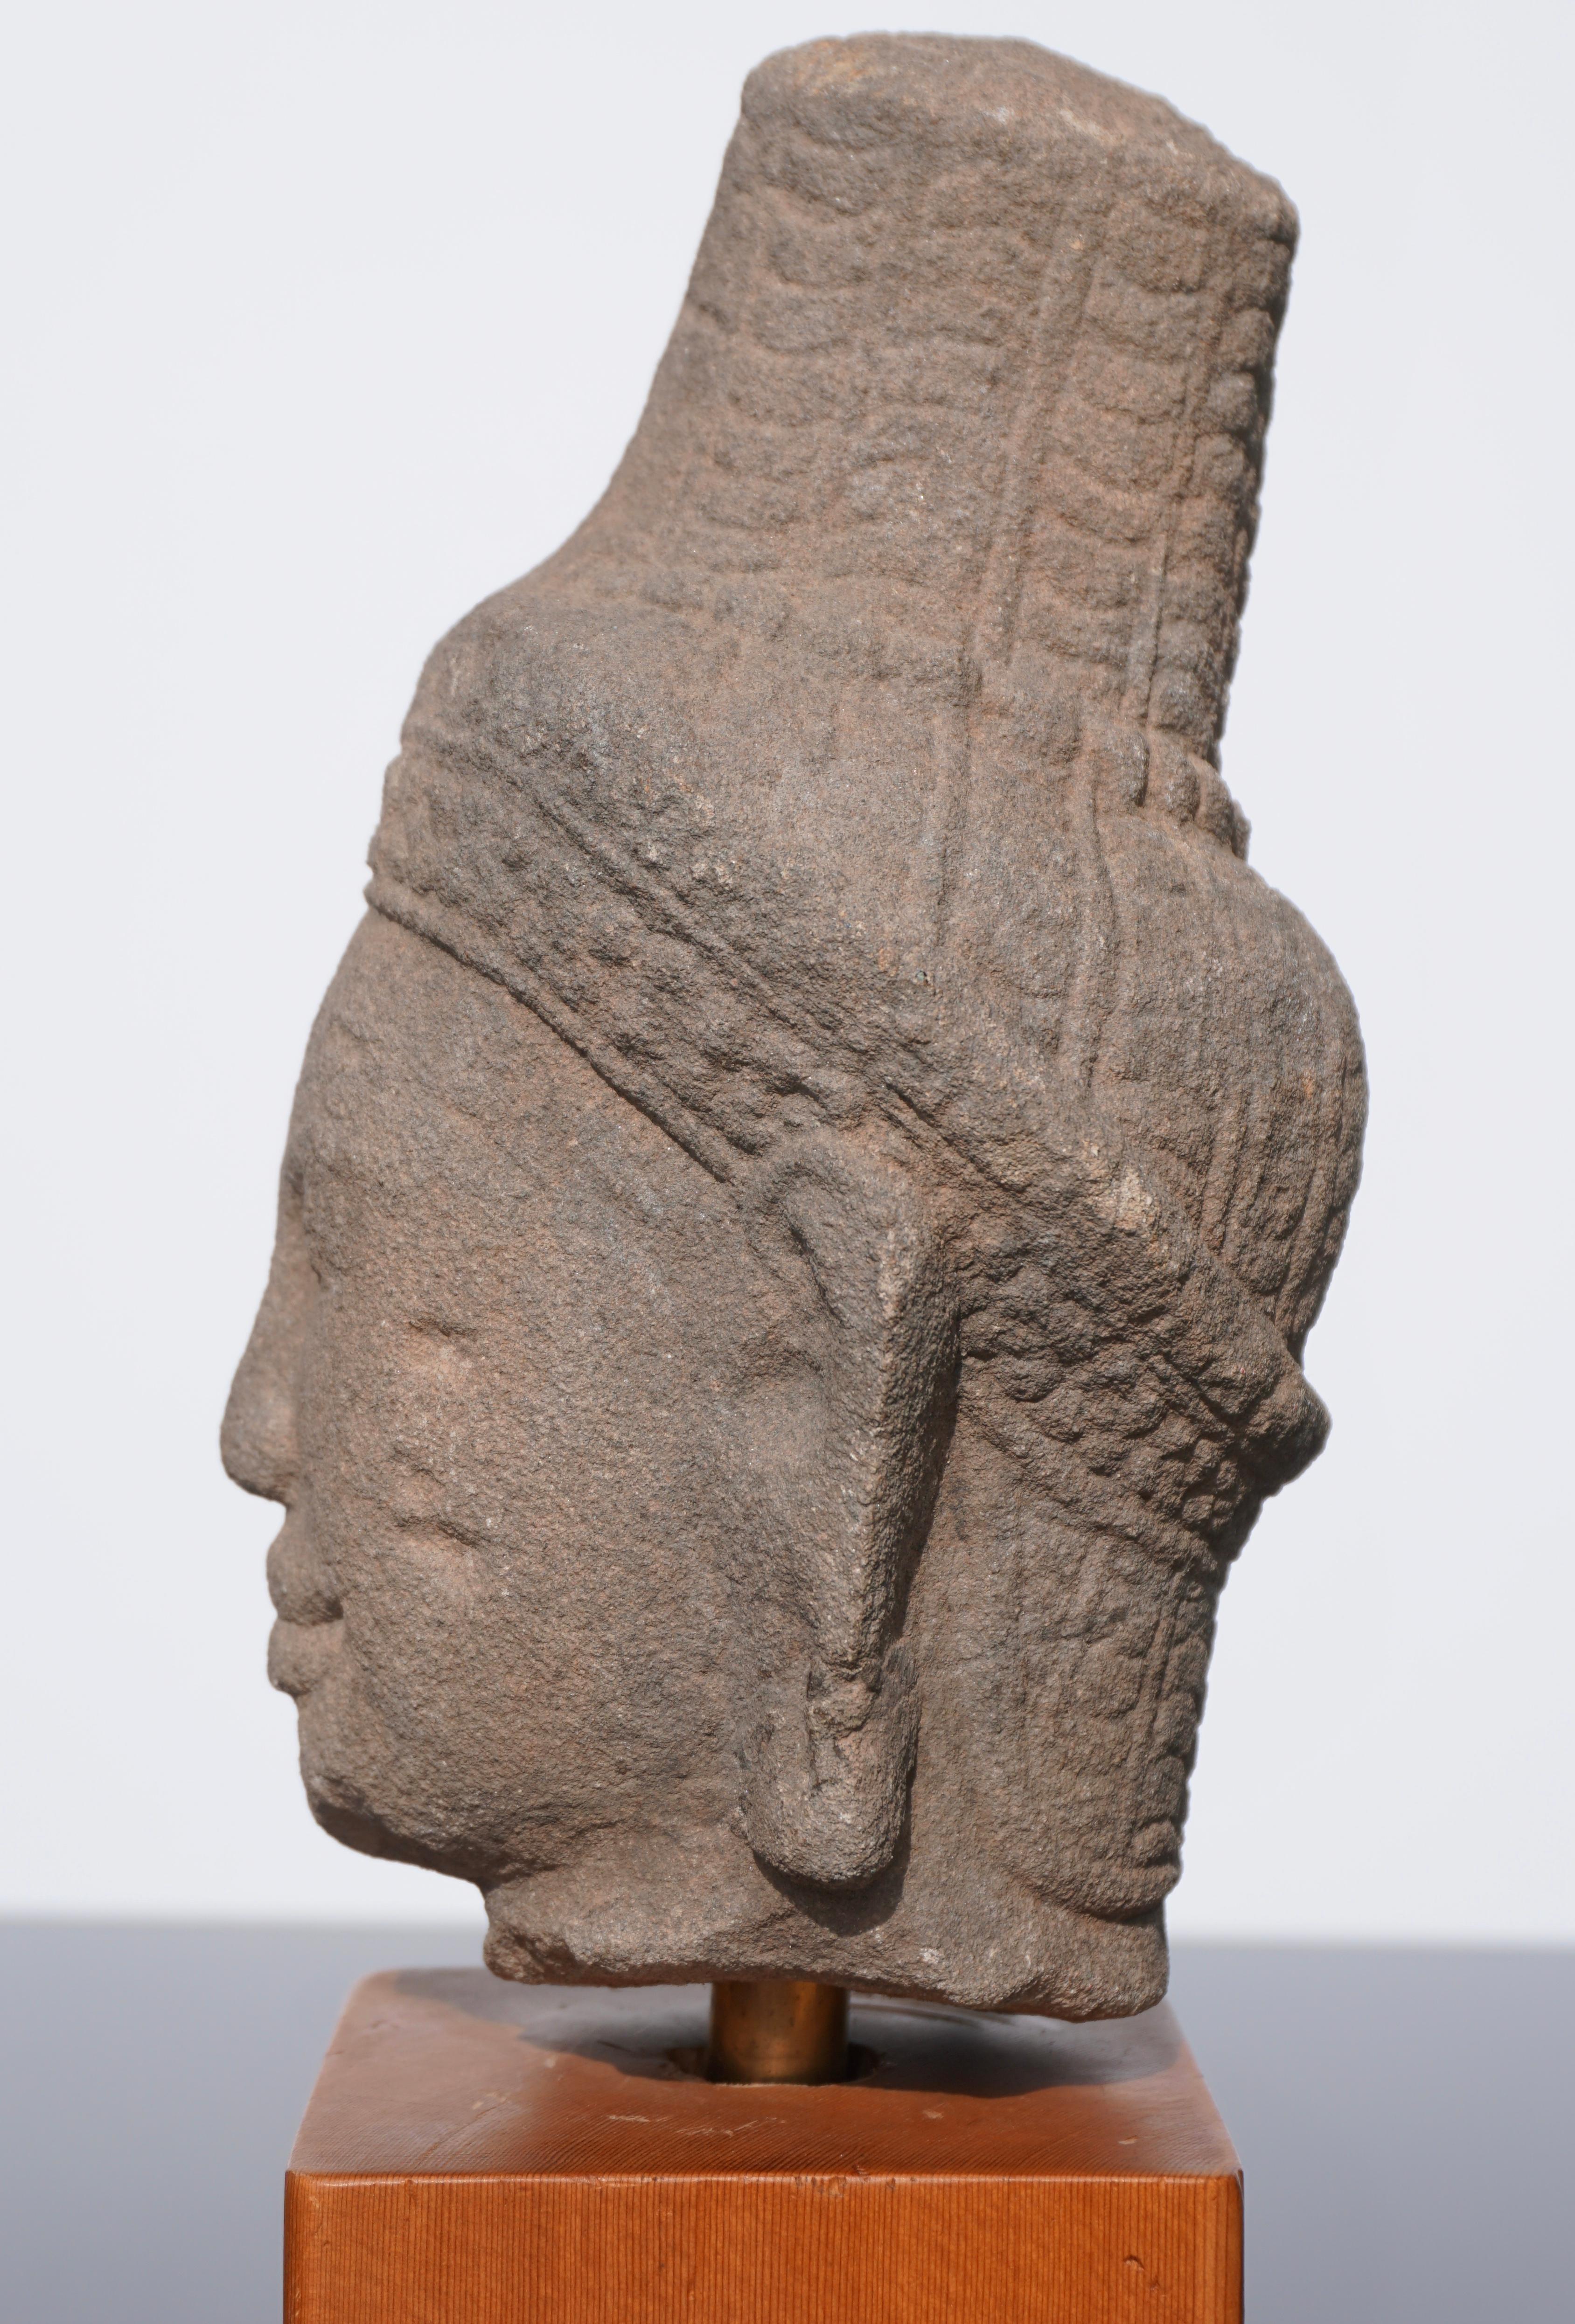 Cambodian Khmer Sandstone Buddha Shiva Head 11th Century